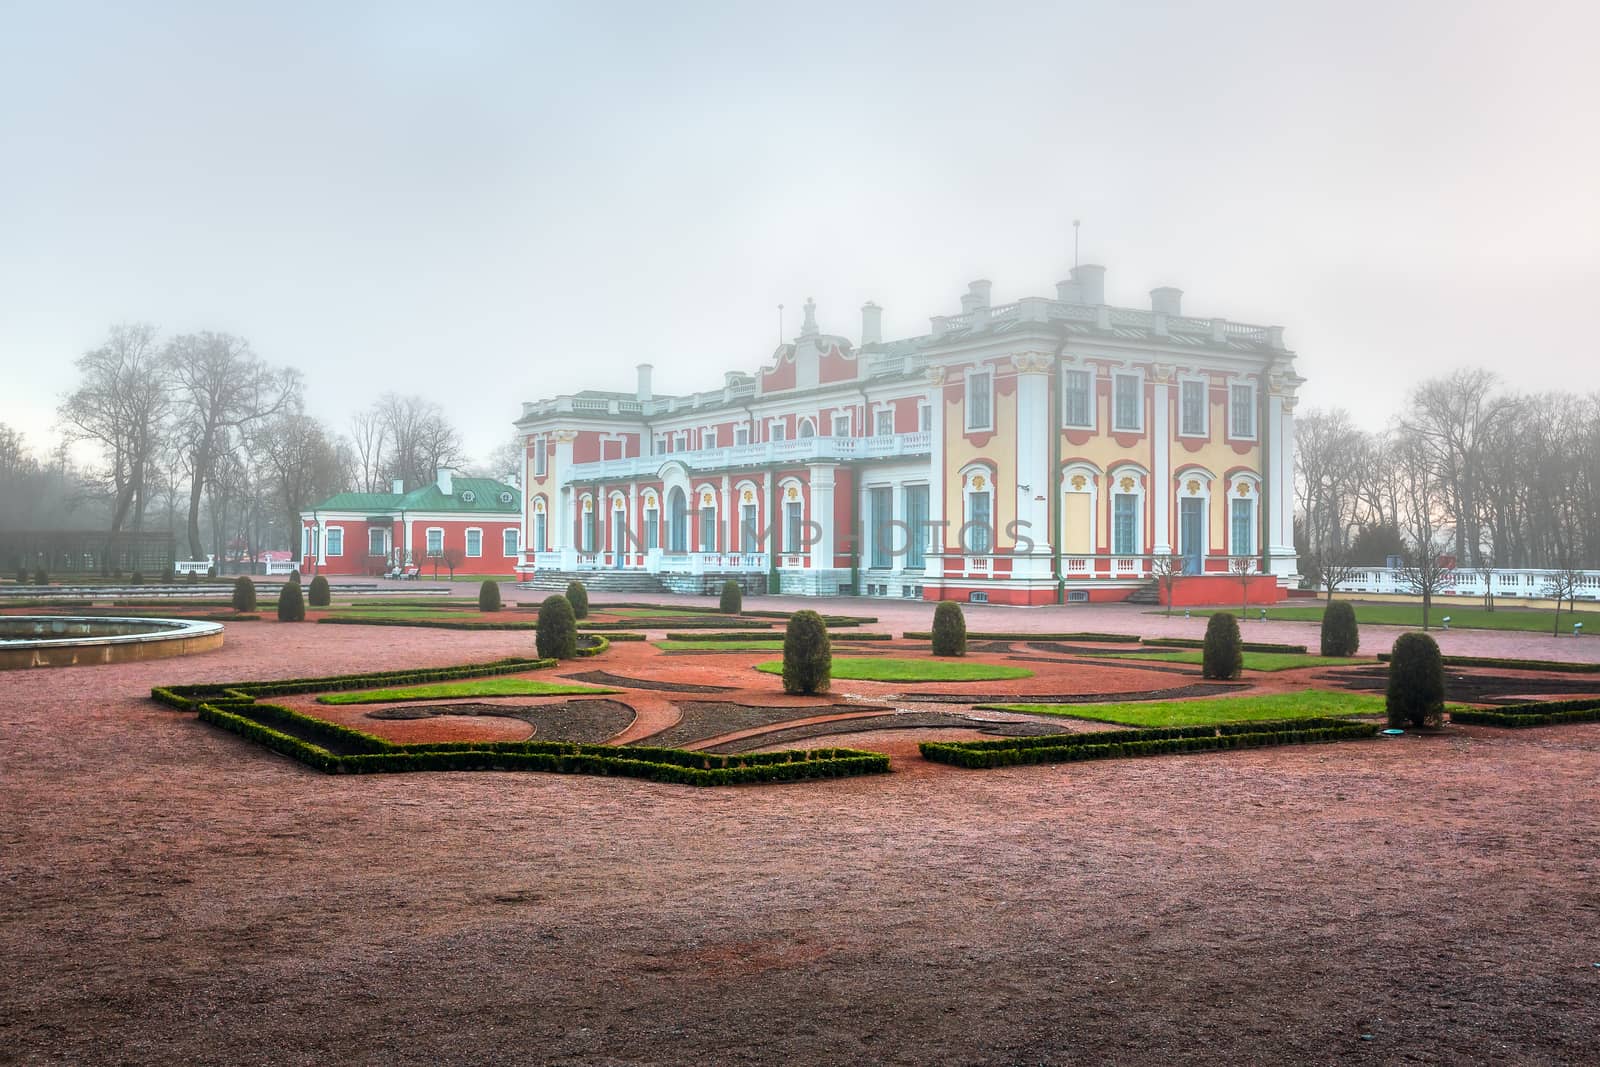 The Kadriorg Palace built by Tsar Peter the Great in Tallinn, Estonia